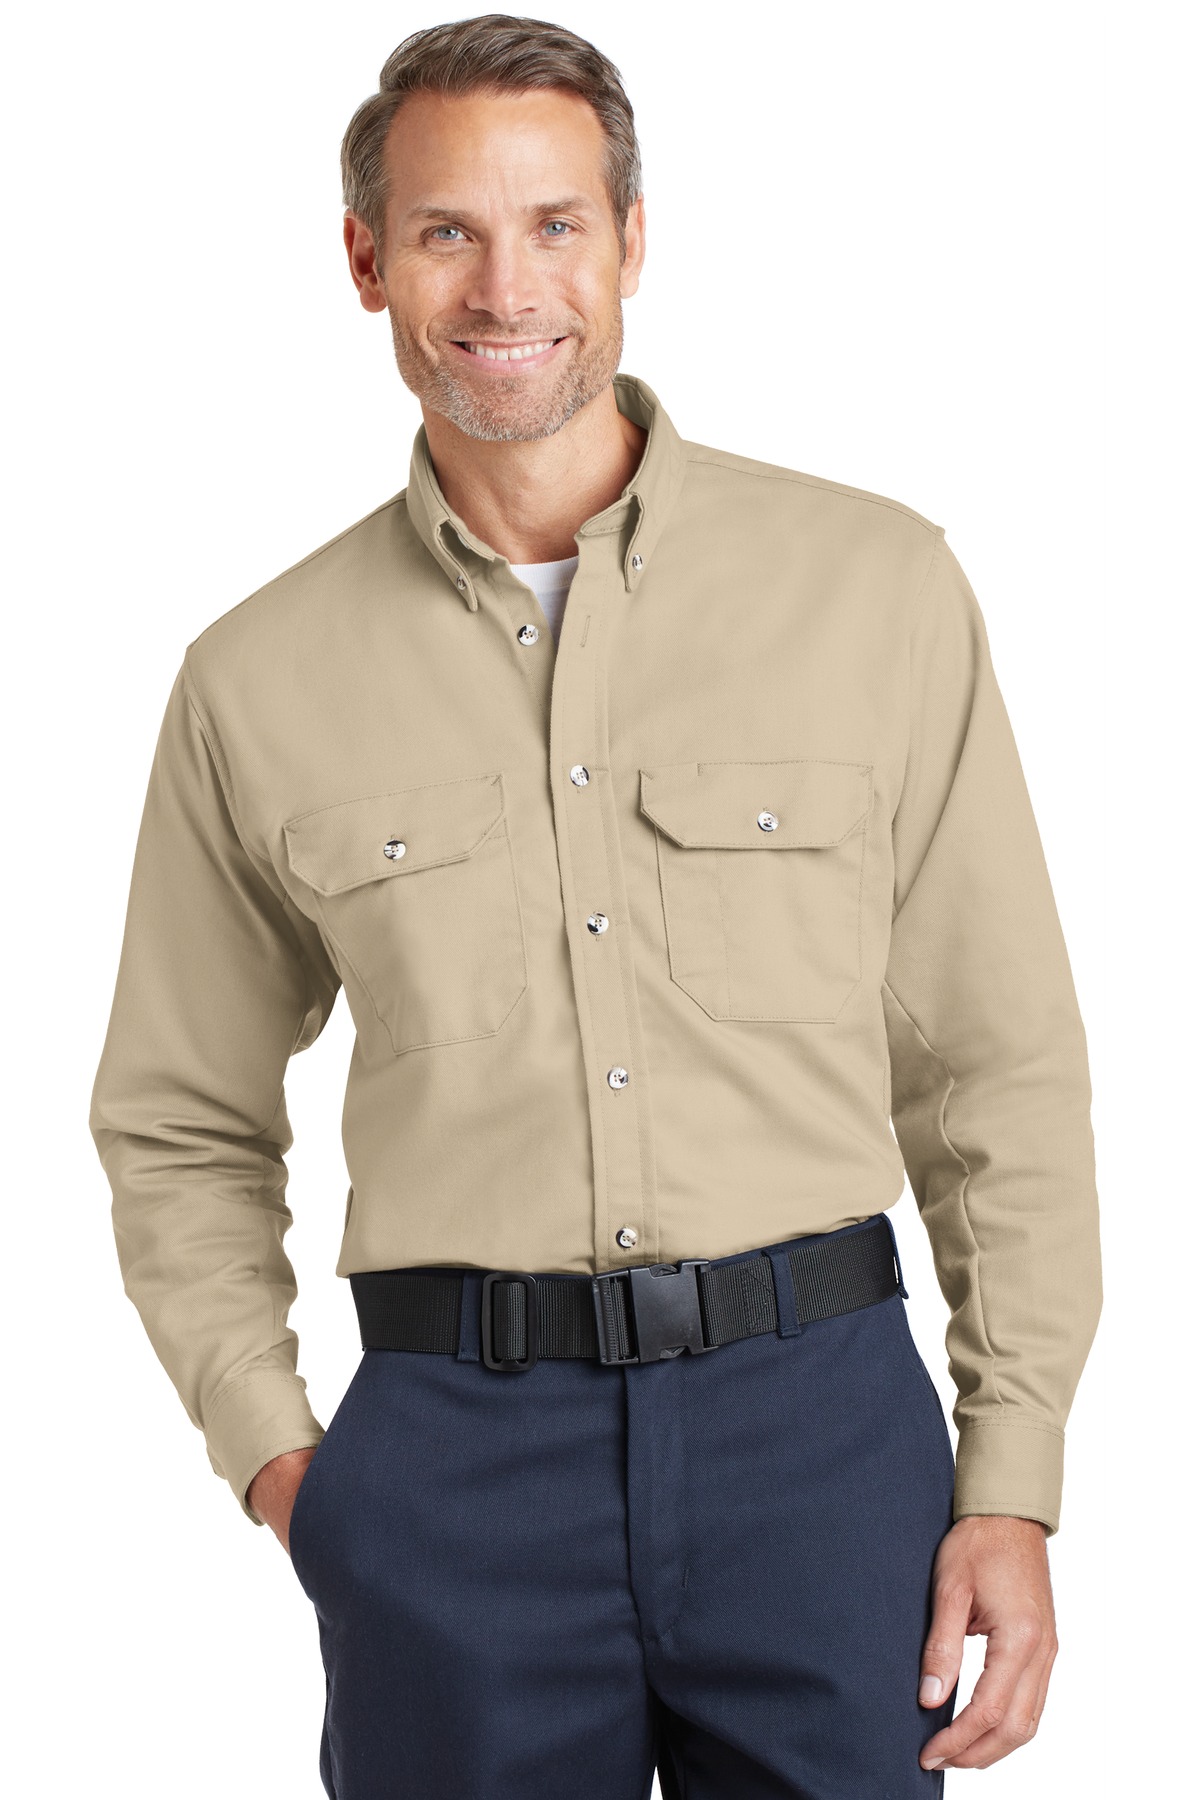 Bulwark Industrial Workwear&Woven Shirts ® EXCEL FR® ComforTouch® Dress Uniform Shirt.-Bulwark